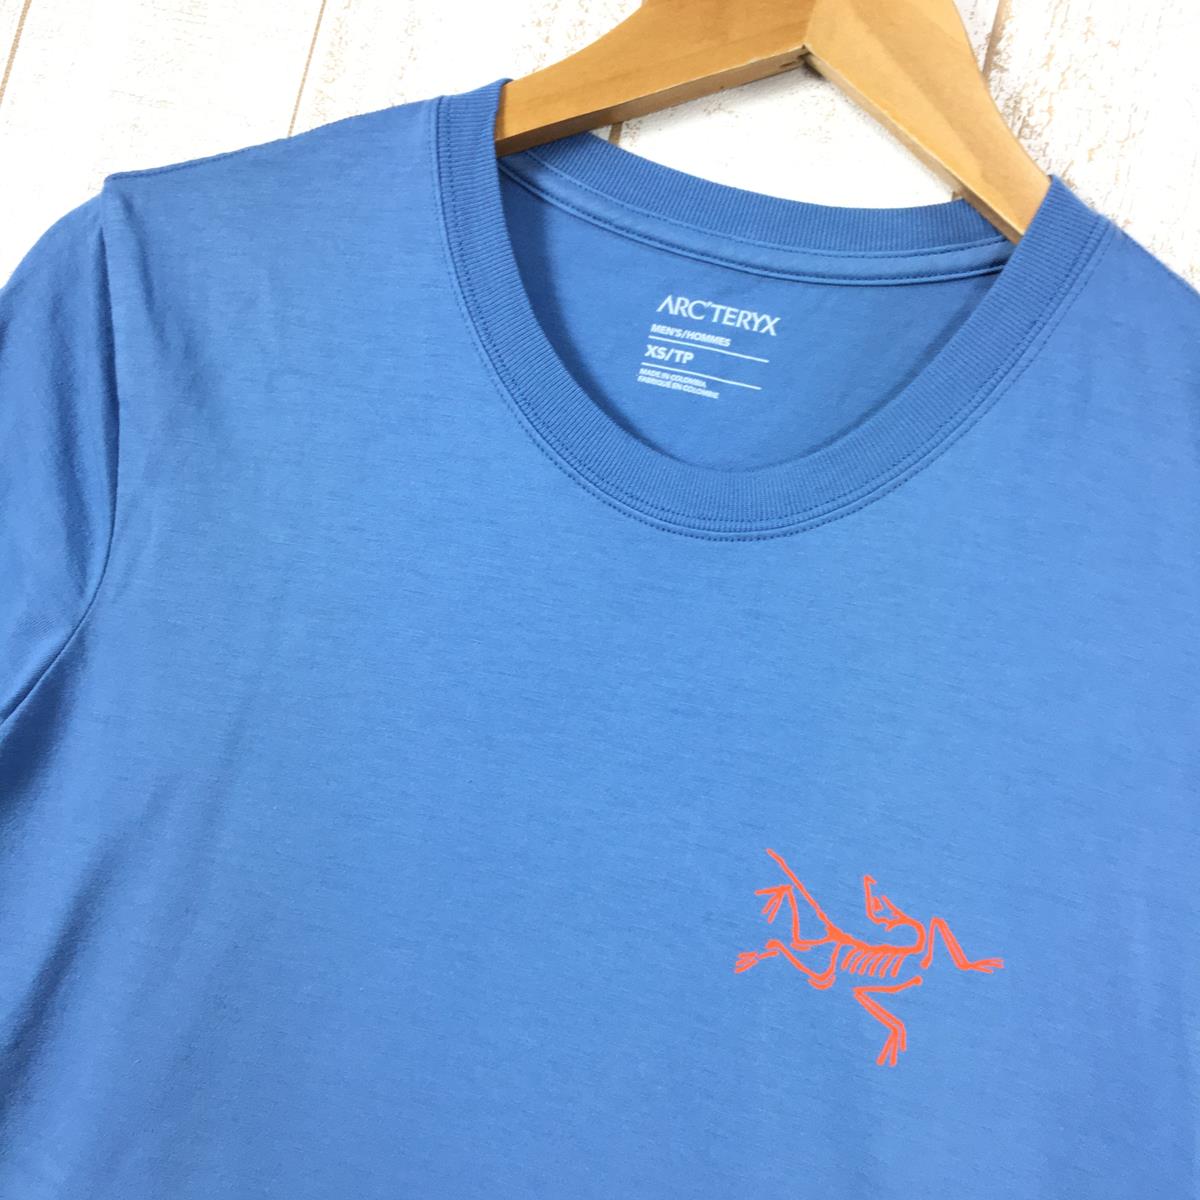 【MEN's XS】 アークテリクス アーク マルチバード ロゴ ショートスリーブ Arc Multibird Logo Short Sleeve Tシャツ ARCTERYX X000007747 020815 Stone Wash ブルー系